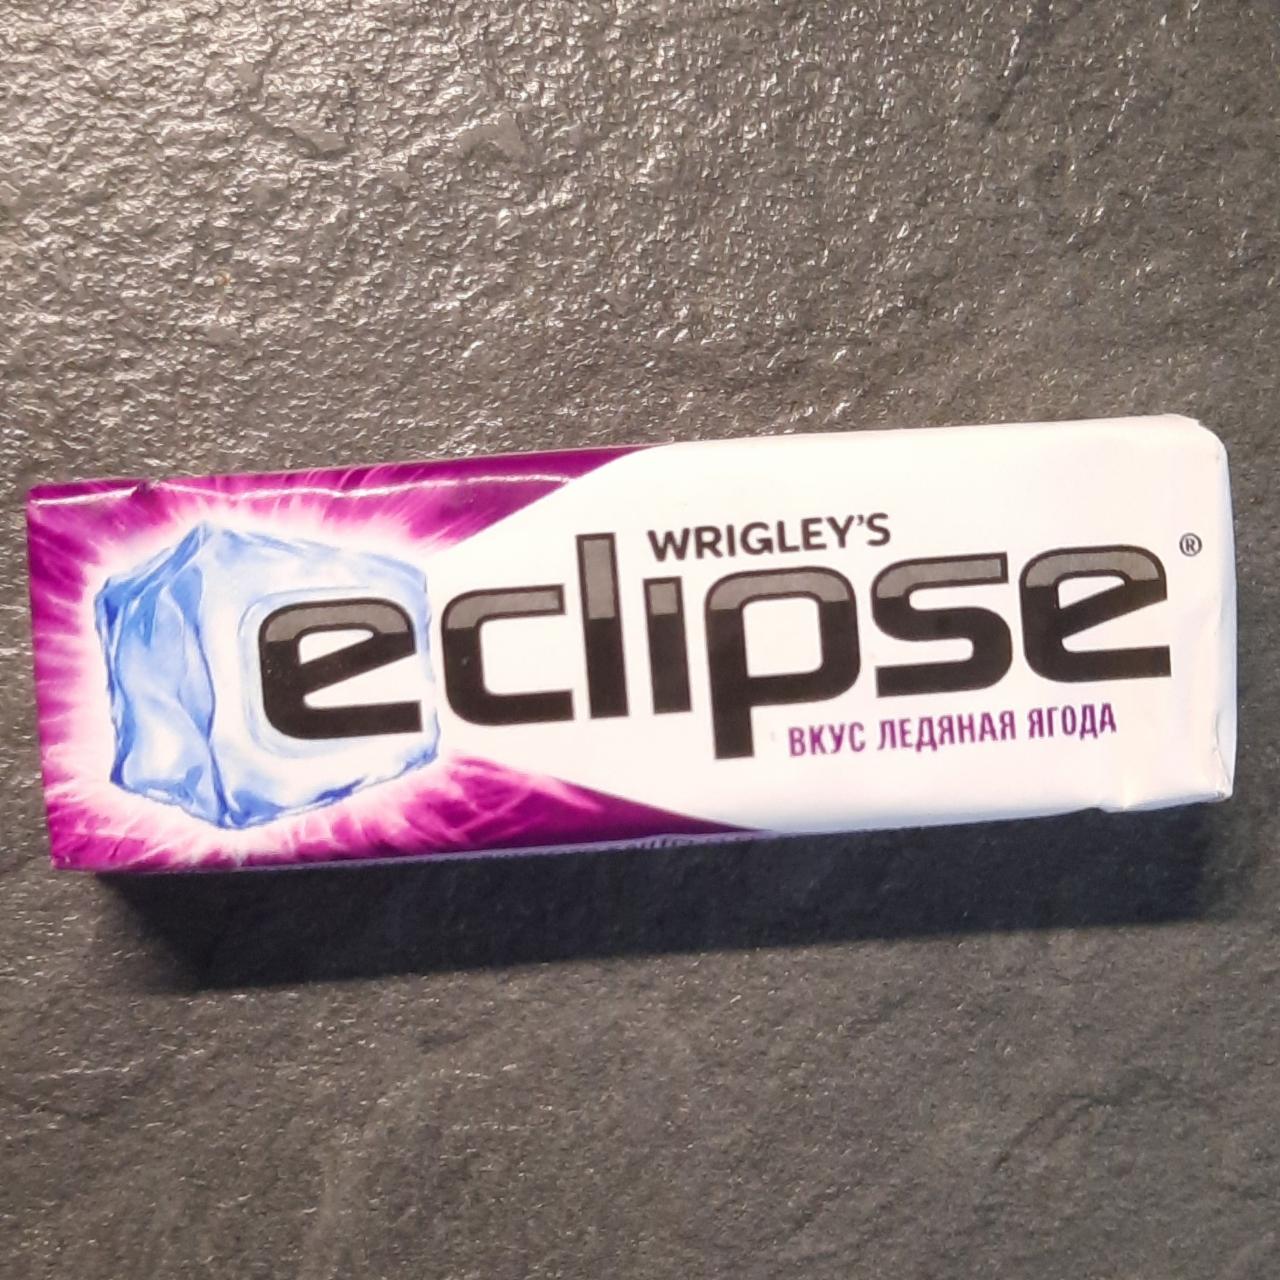 Фото - жвачка eclipse вкус ледяная ягода Wrigley's